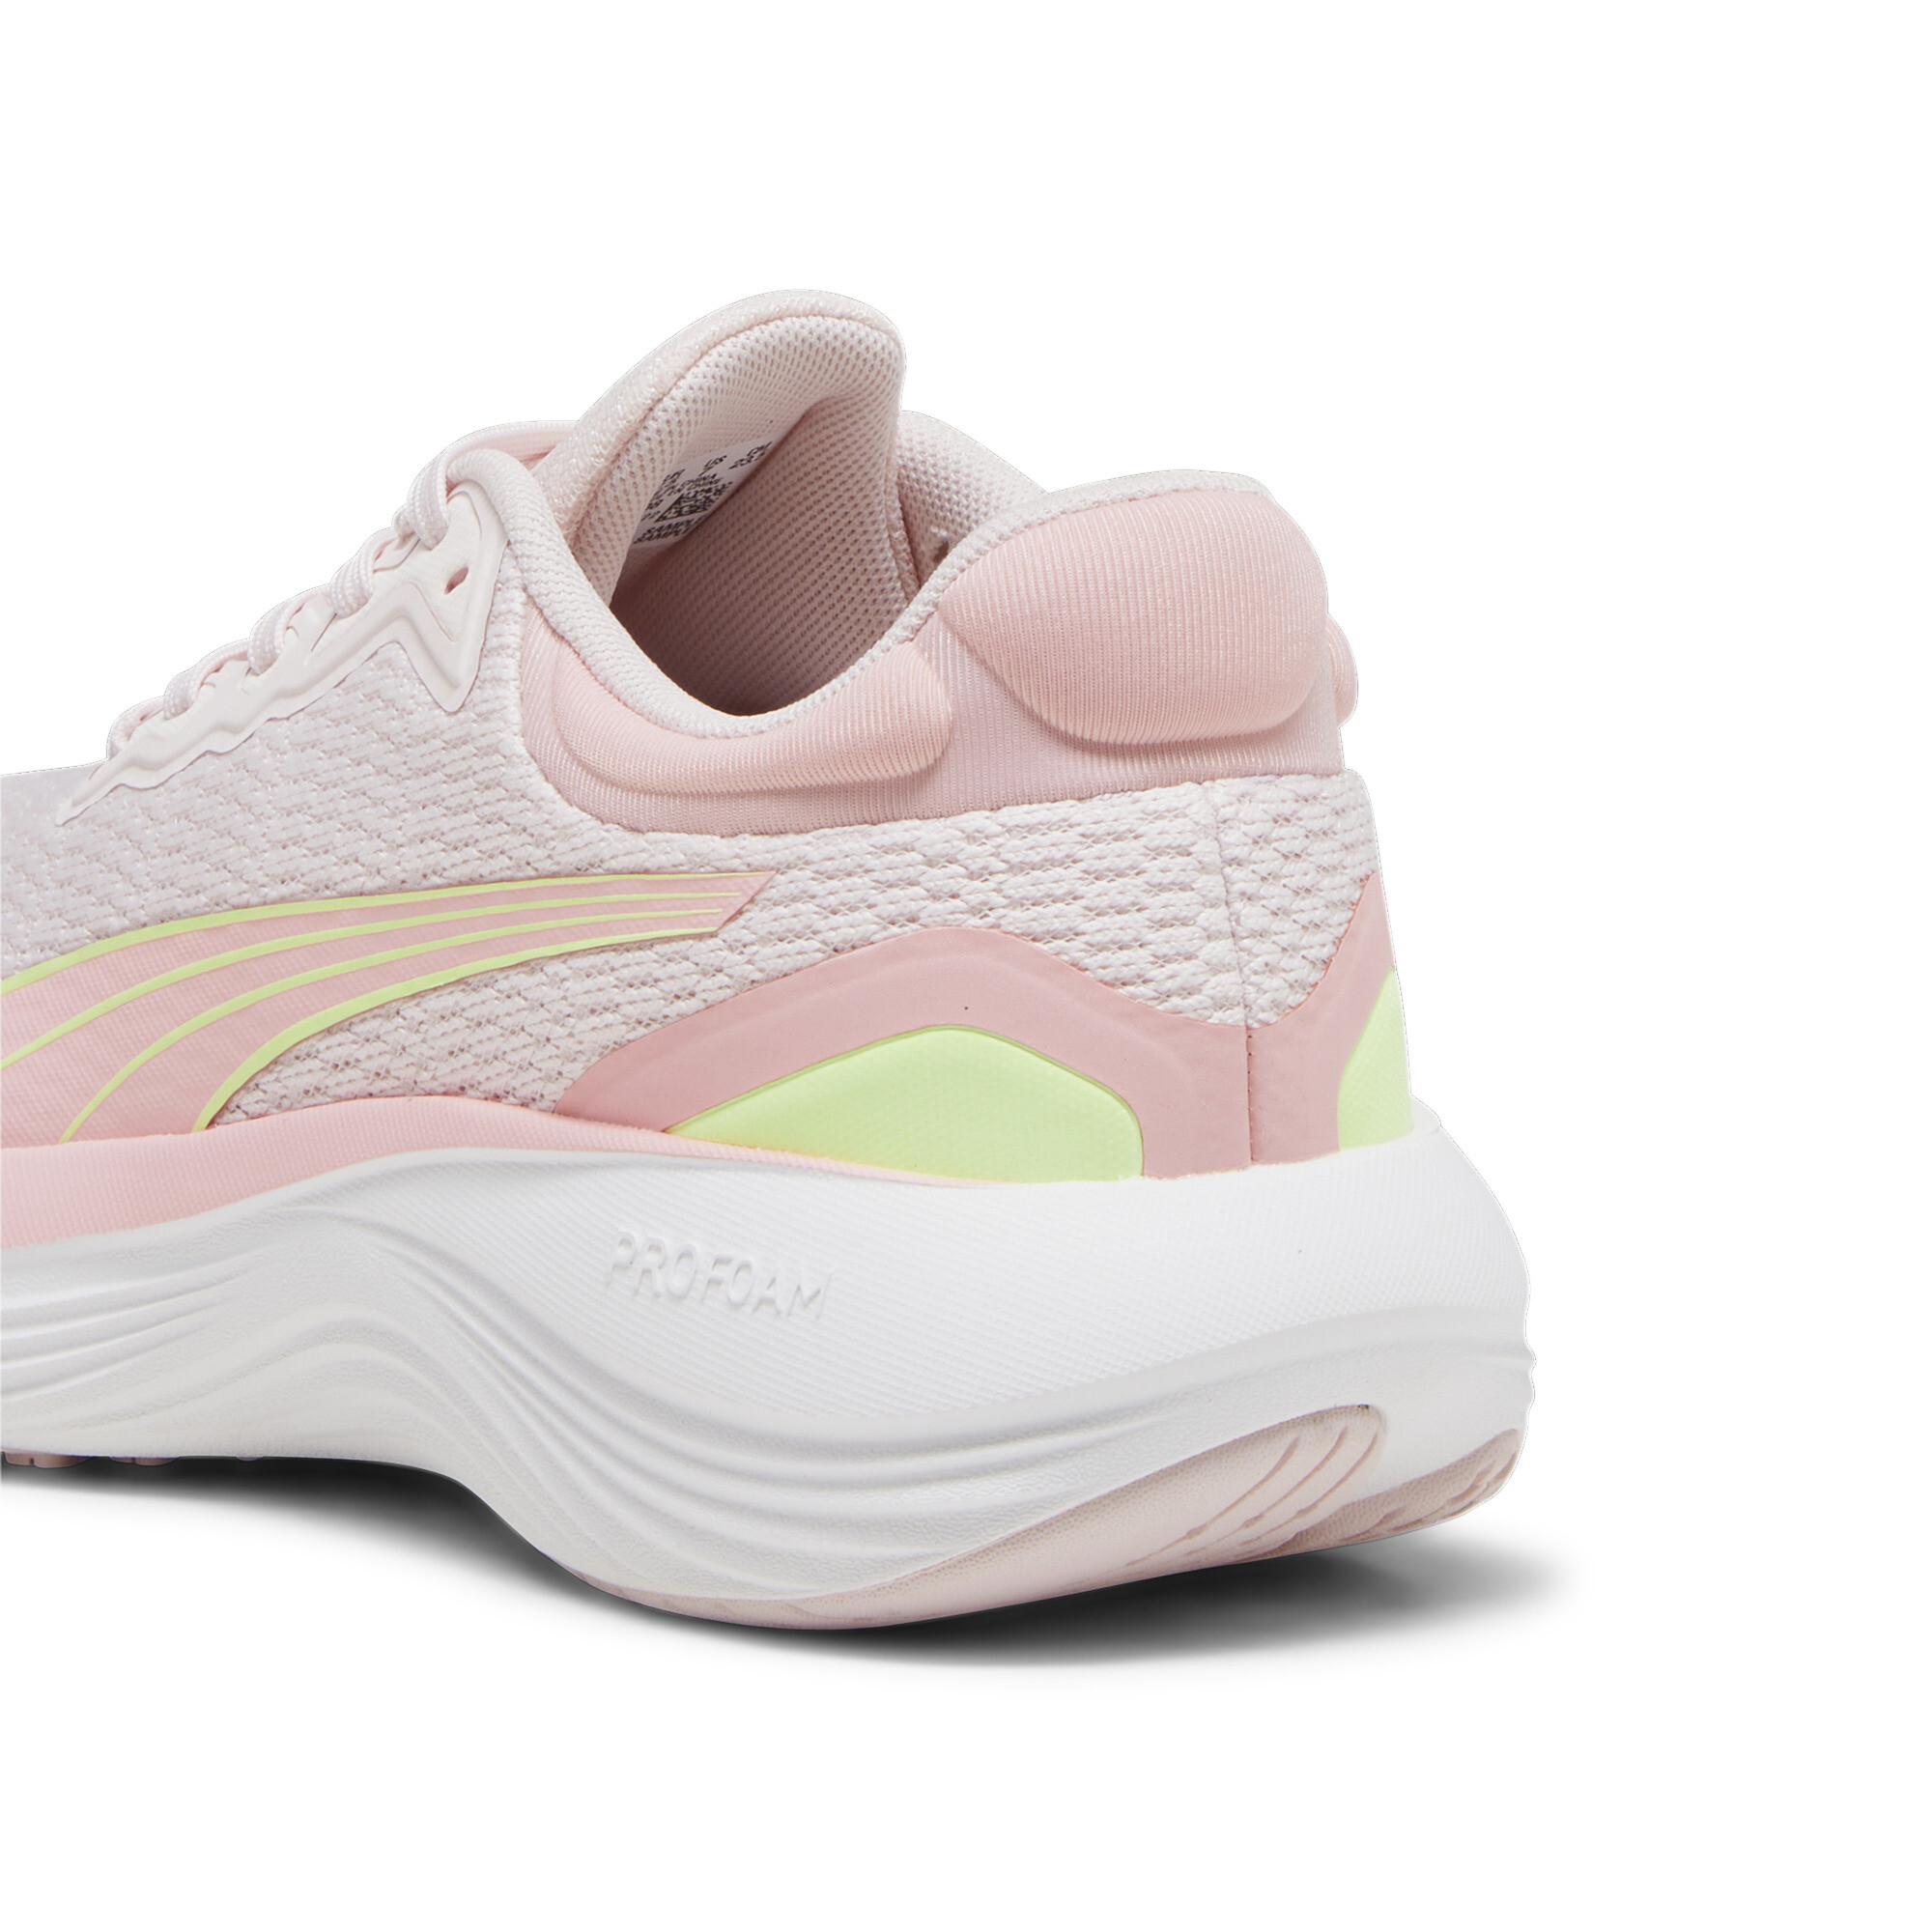 Men's PUMA Scend Pro Running Shoes In Pink, Size EU 38.5